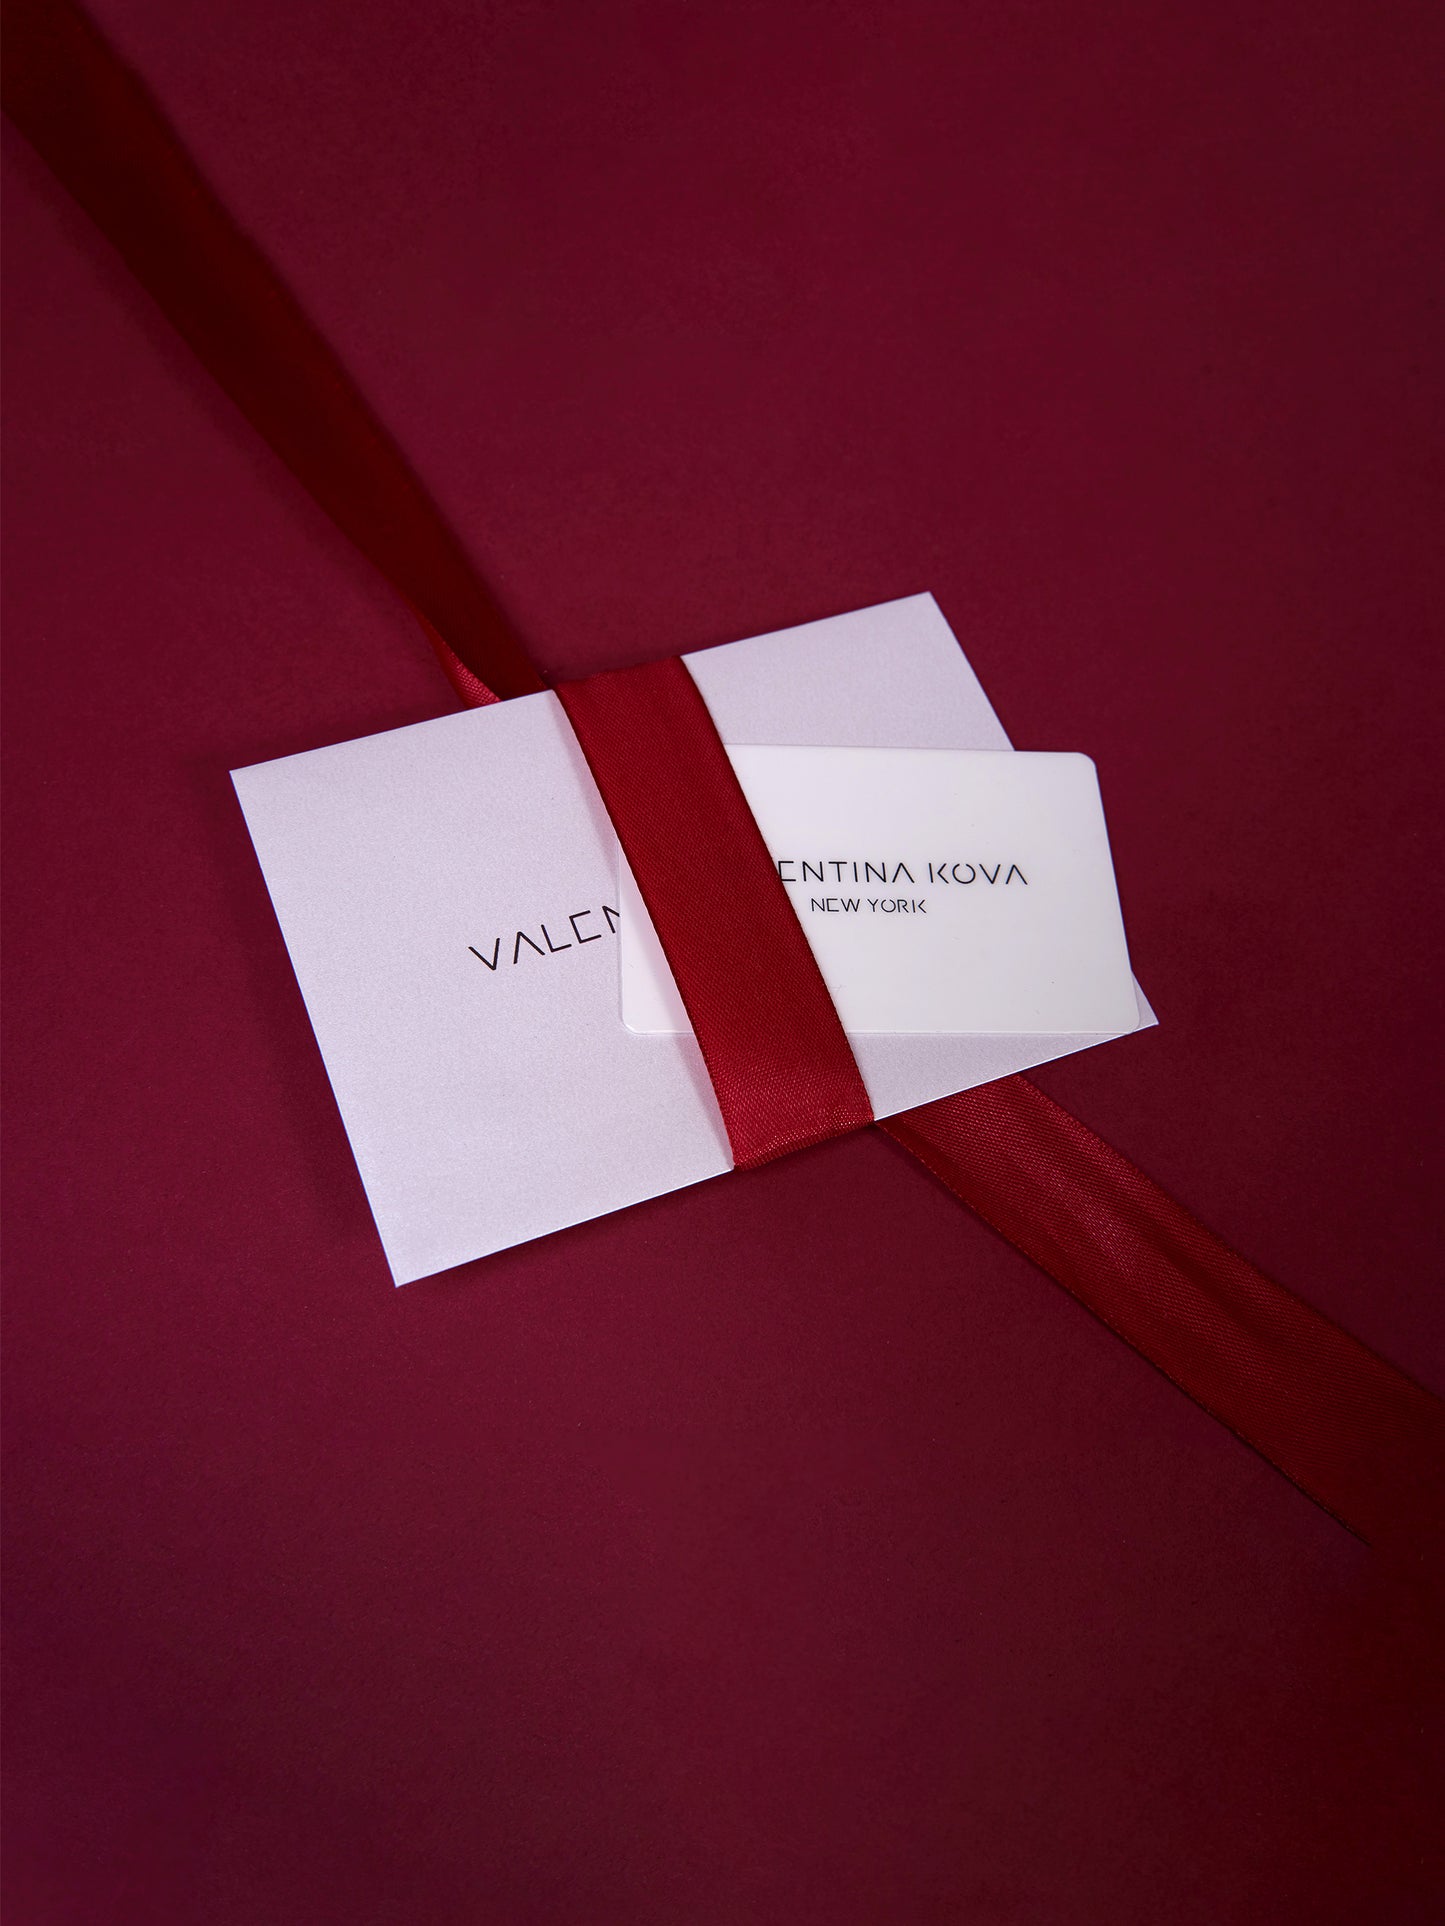 Valentina Kova Gift Card